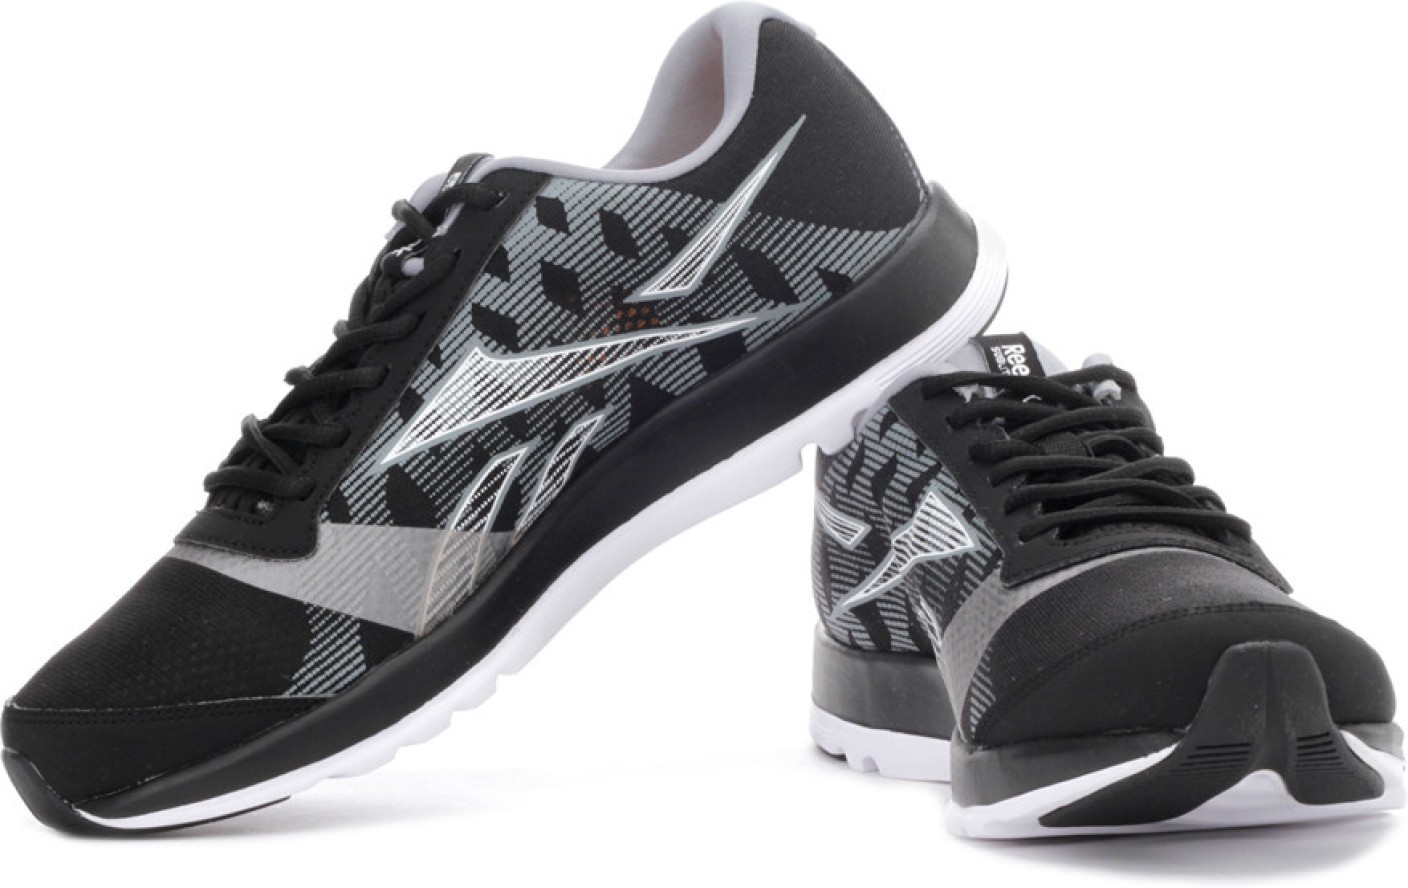 Reebok Sublite Duo Chase Running Shoes For Men - Buy Black, White, Grey ...